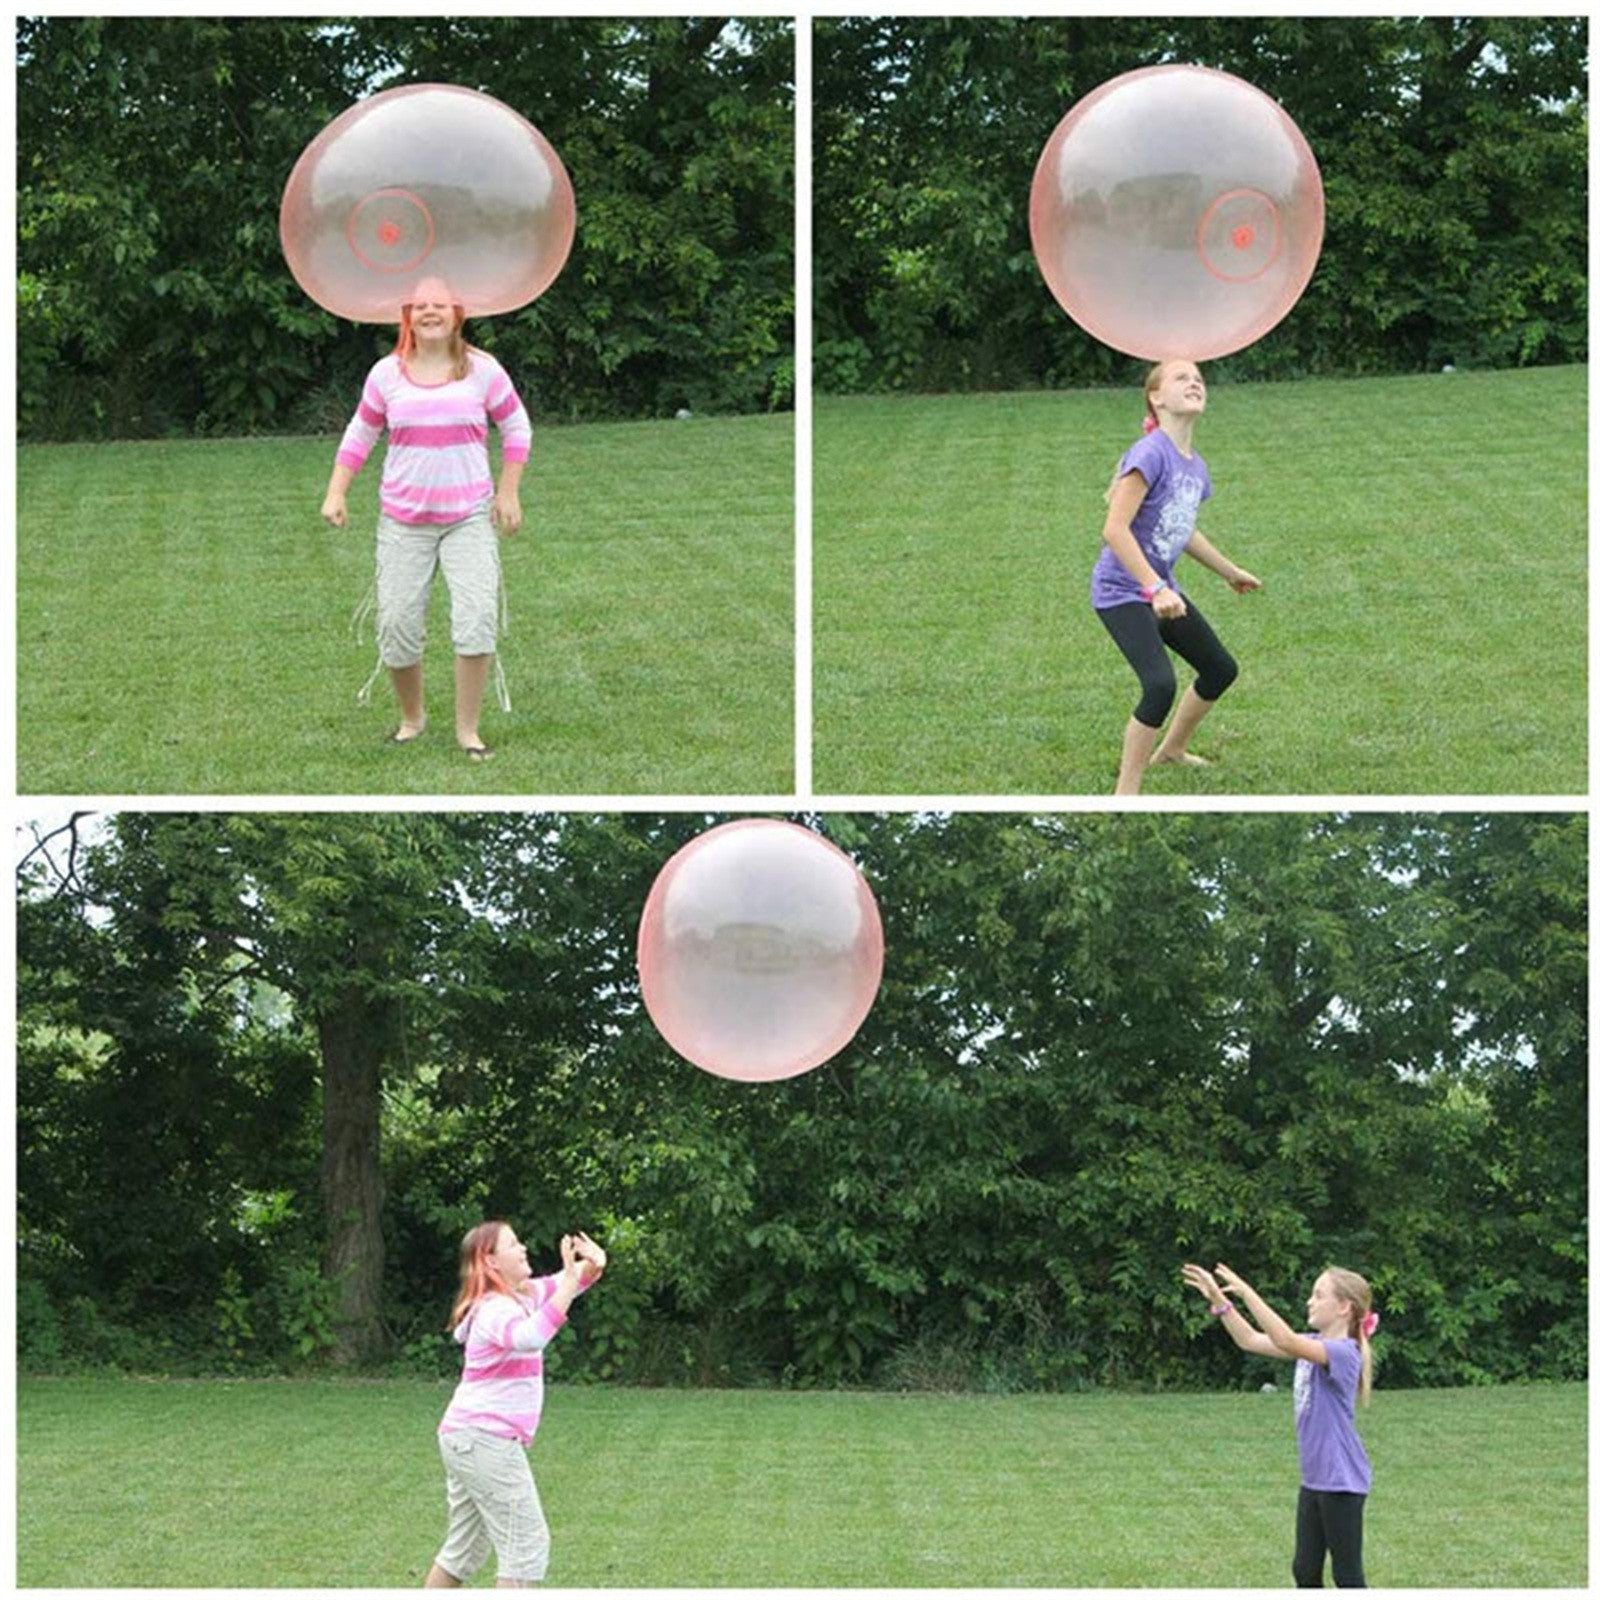 Big Inflatable Ball Children's Toy Elastic Ball Water Ball Bubble Ball Inflatable Ball